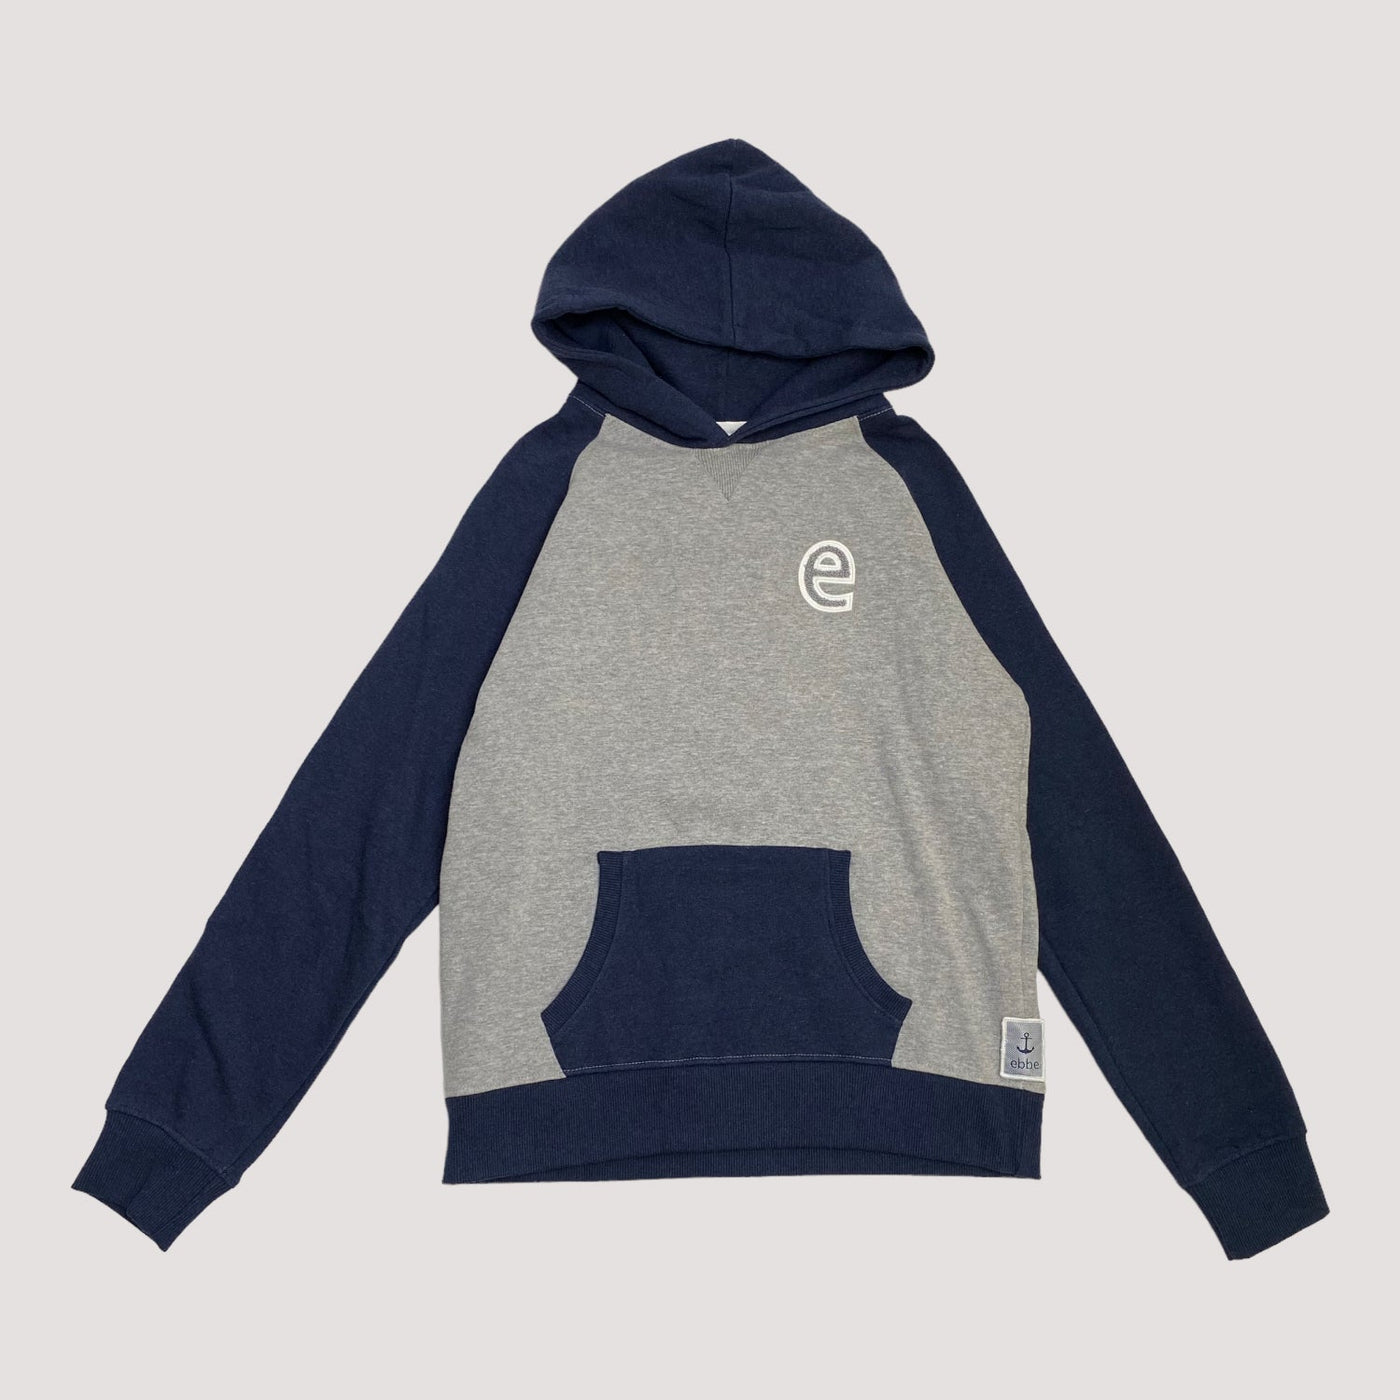 Ebbe hooded sweatshirt, grey/blue | 164cm